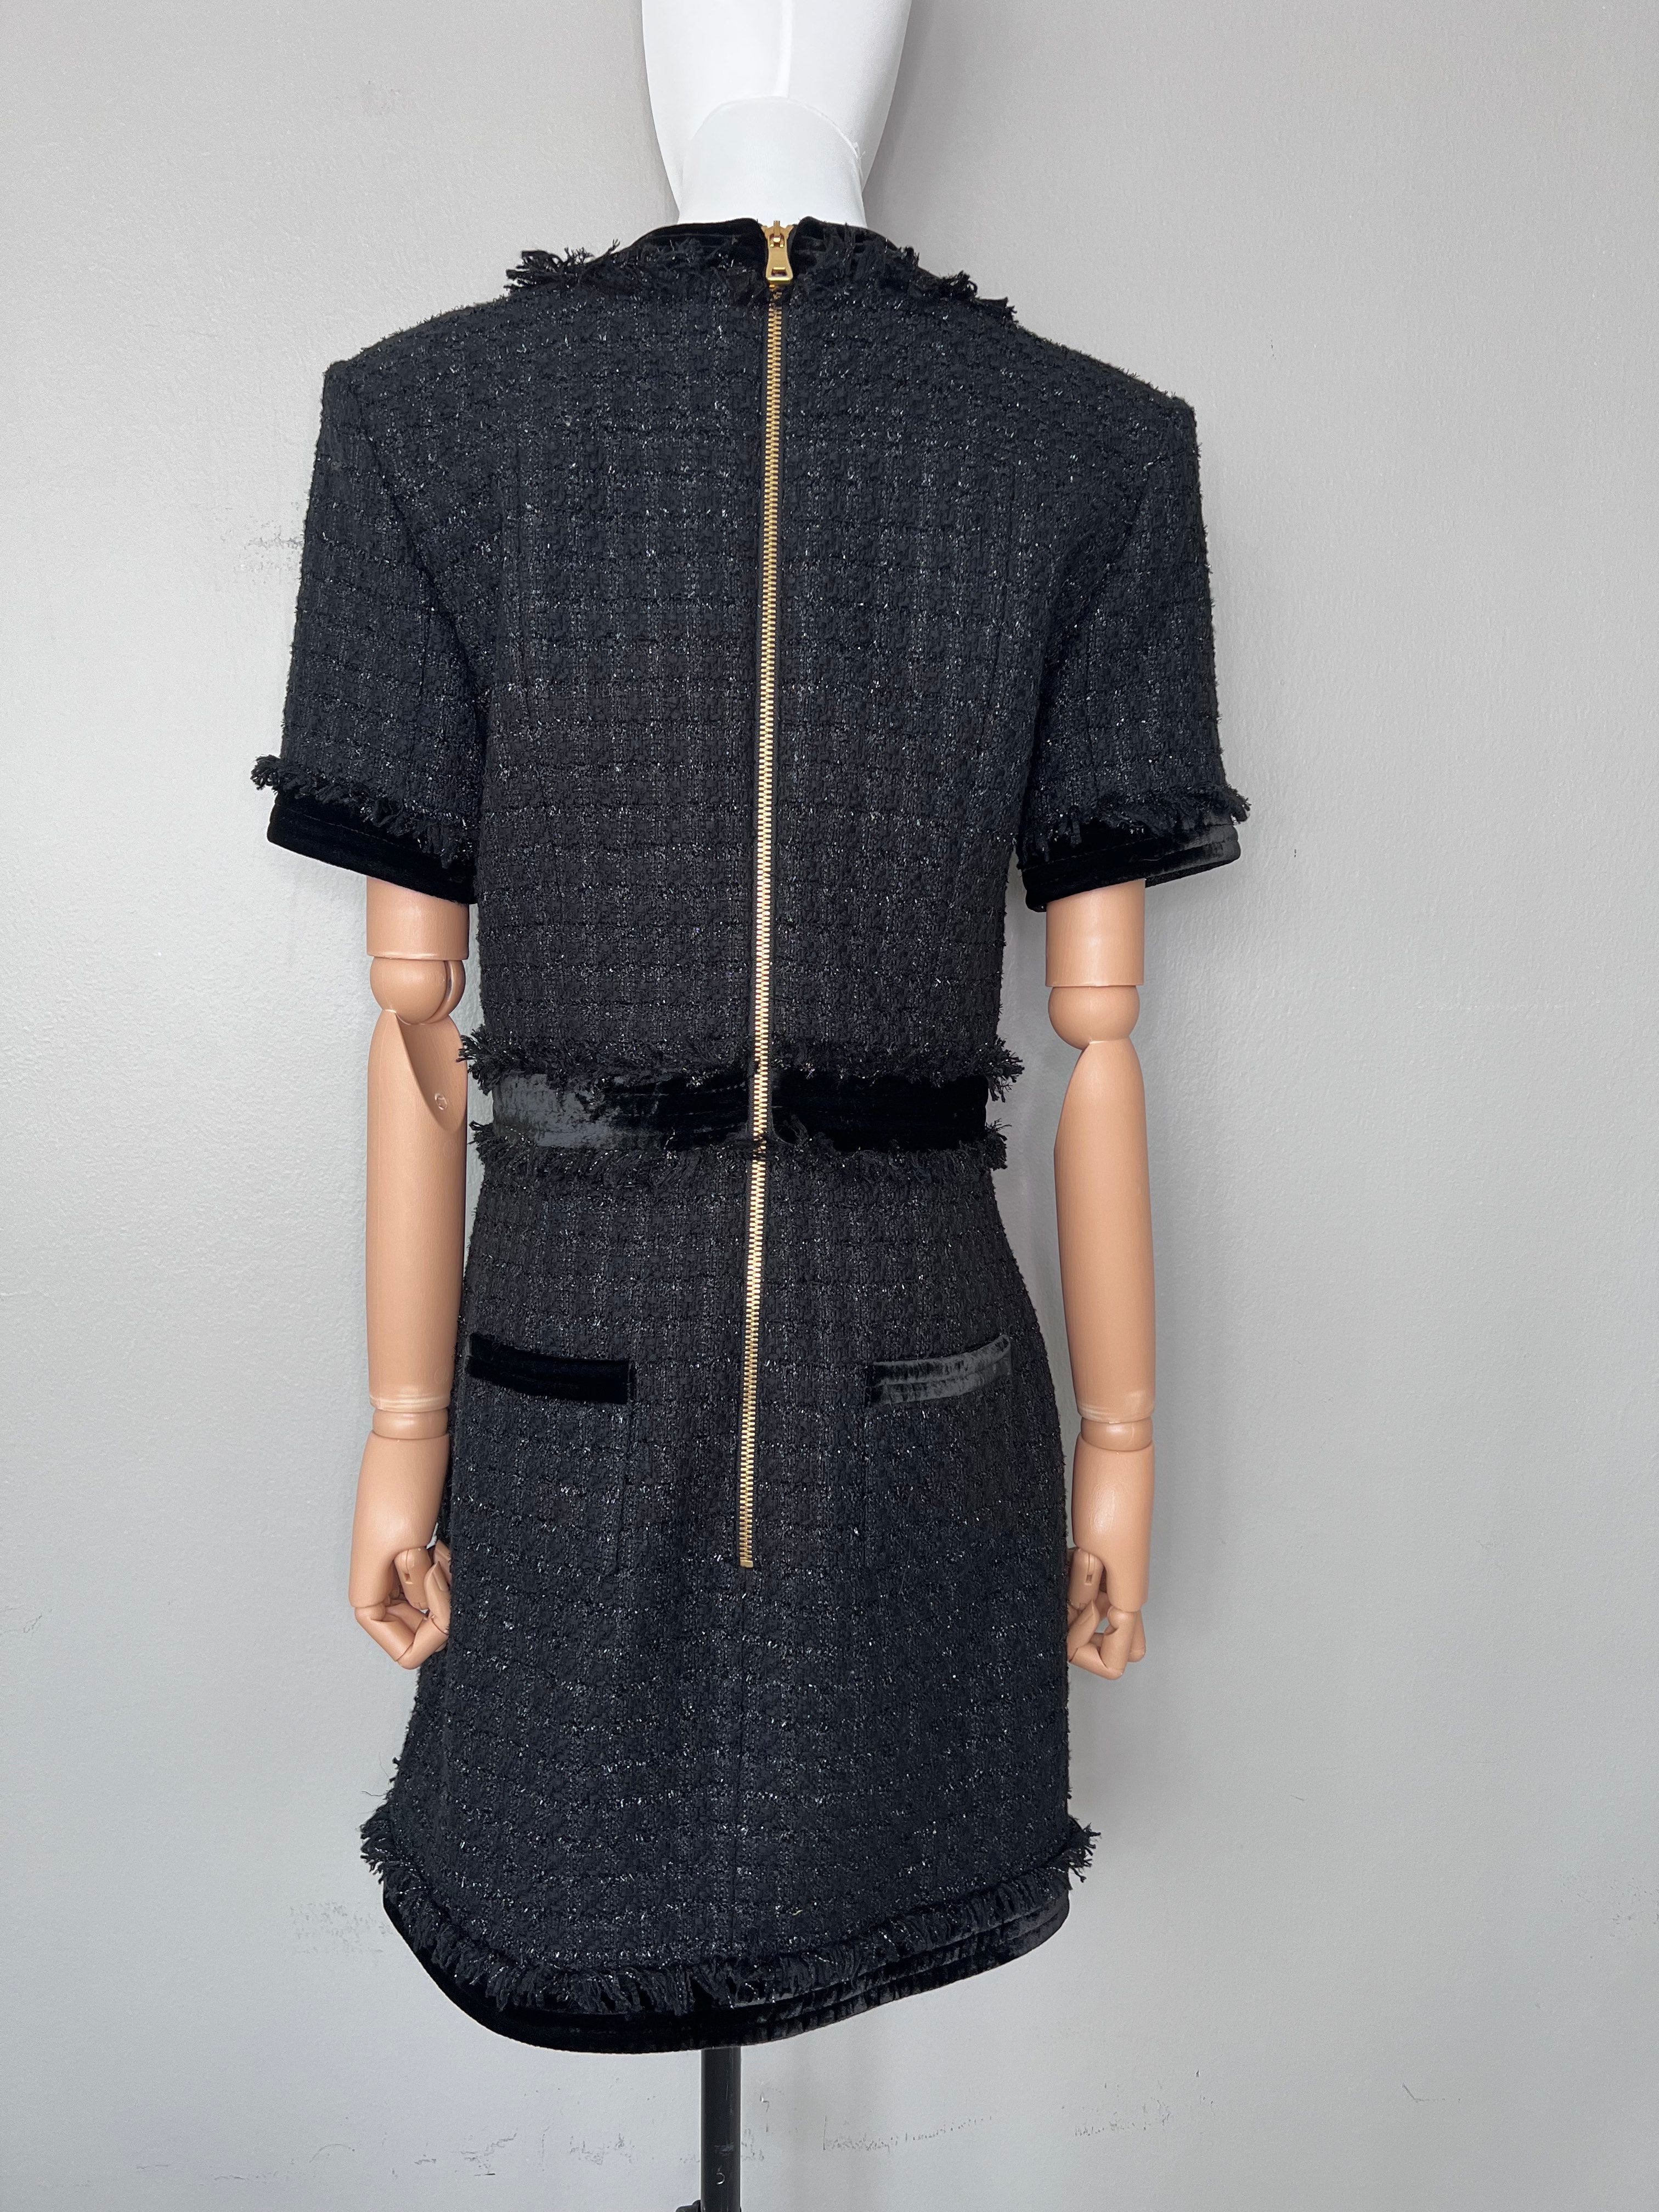 Brand new! The Classic Black Tweed Dress - BALMAIN